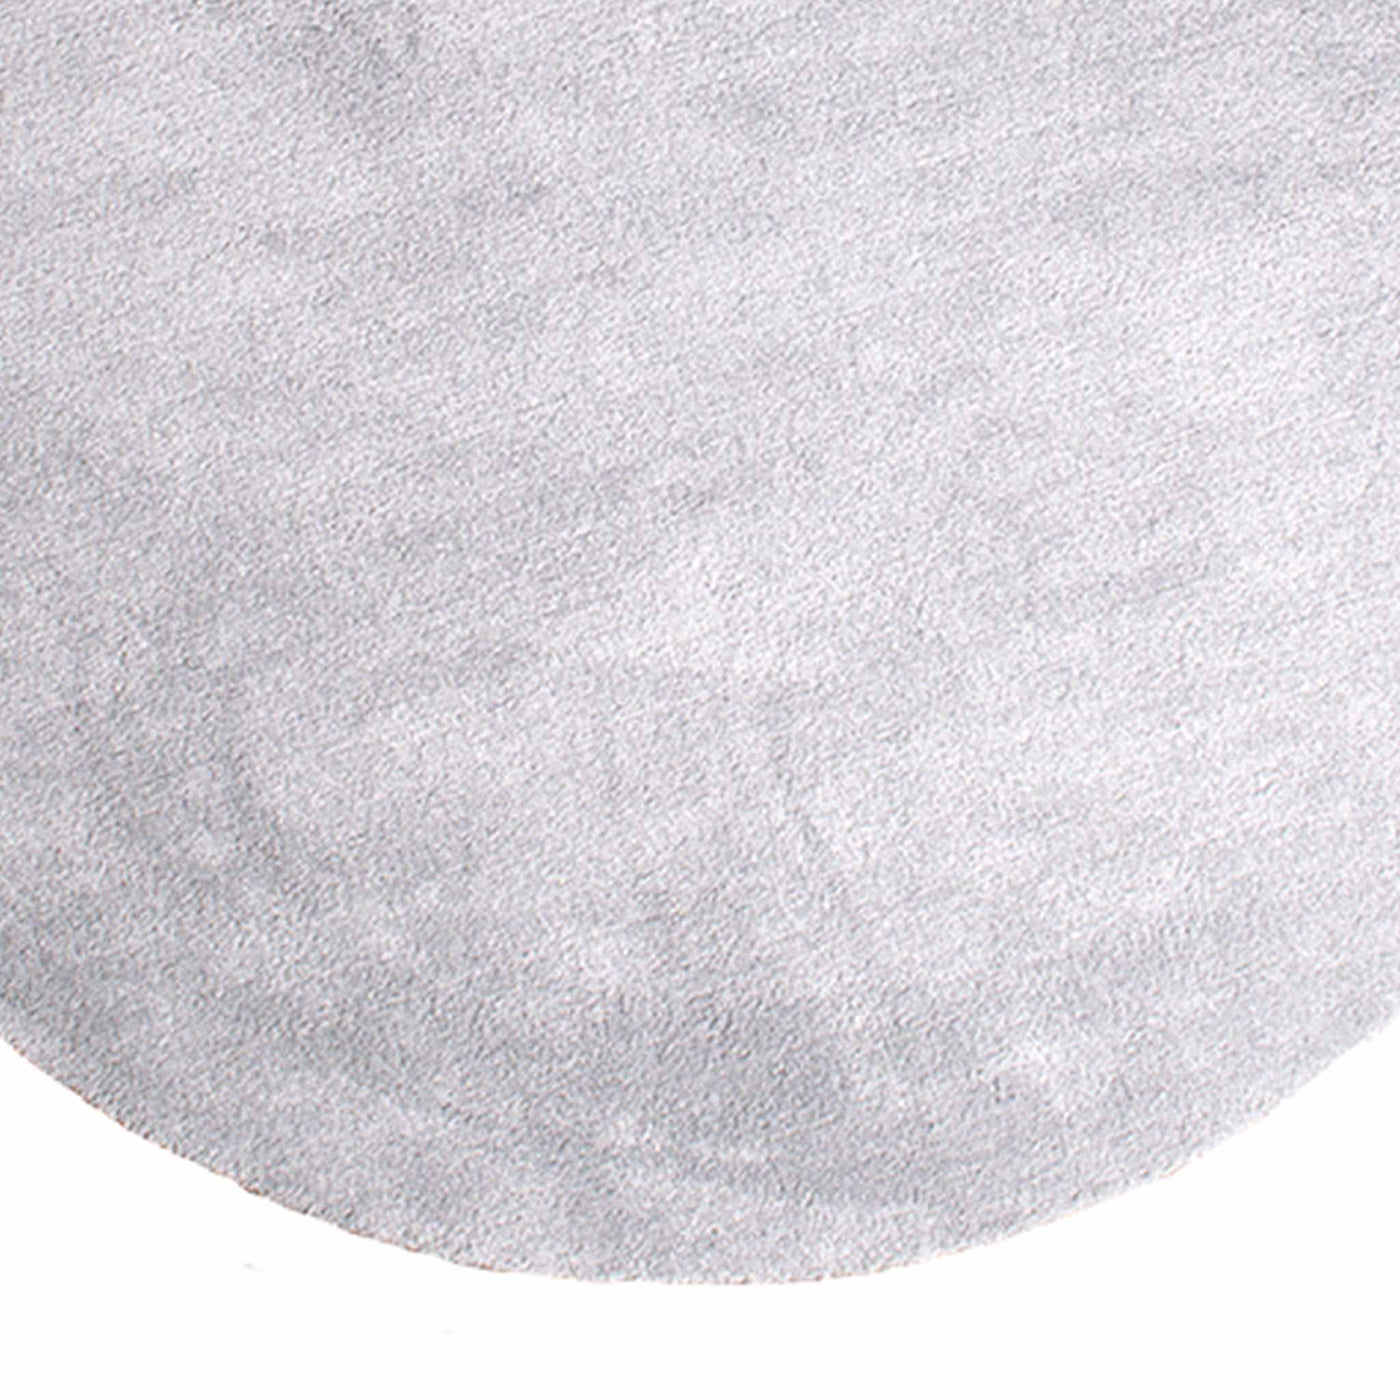 Sensation rundt luv tæppe i grå fra HC Tæpper